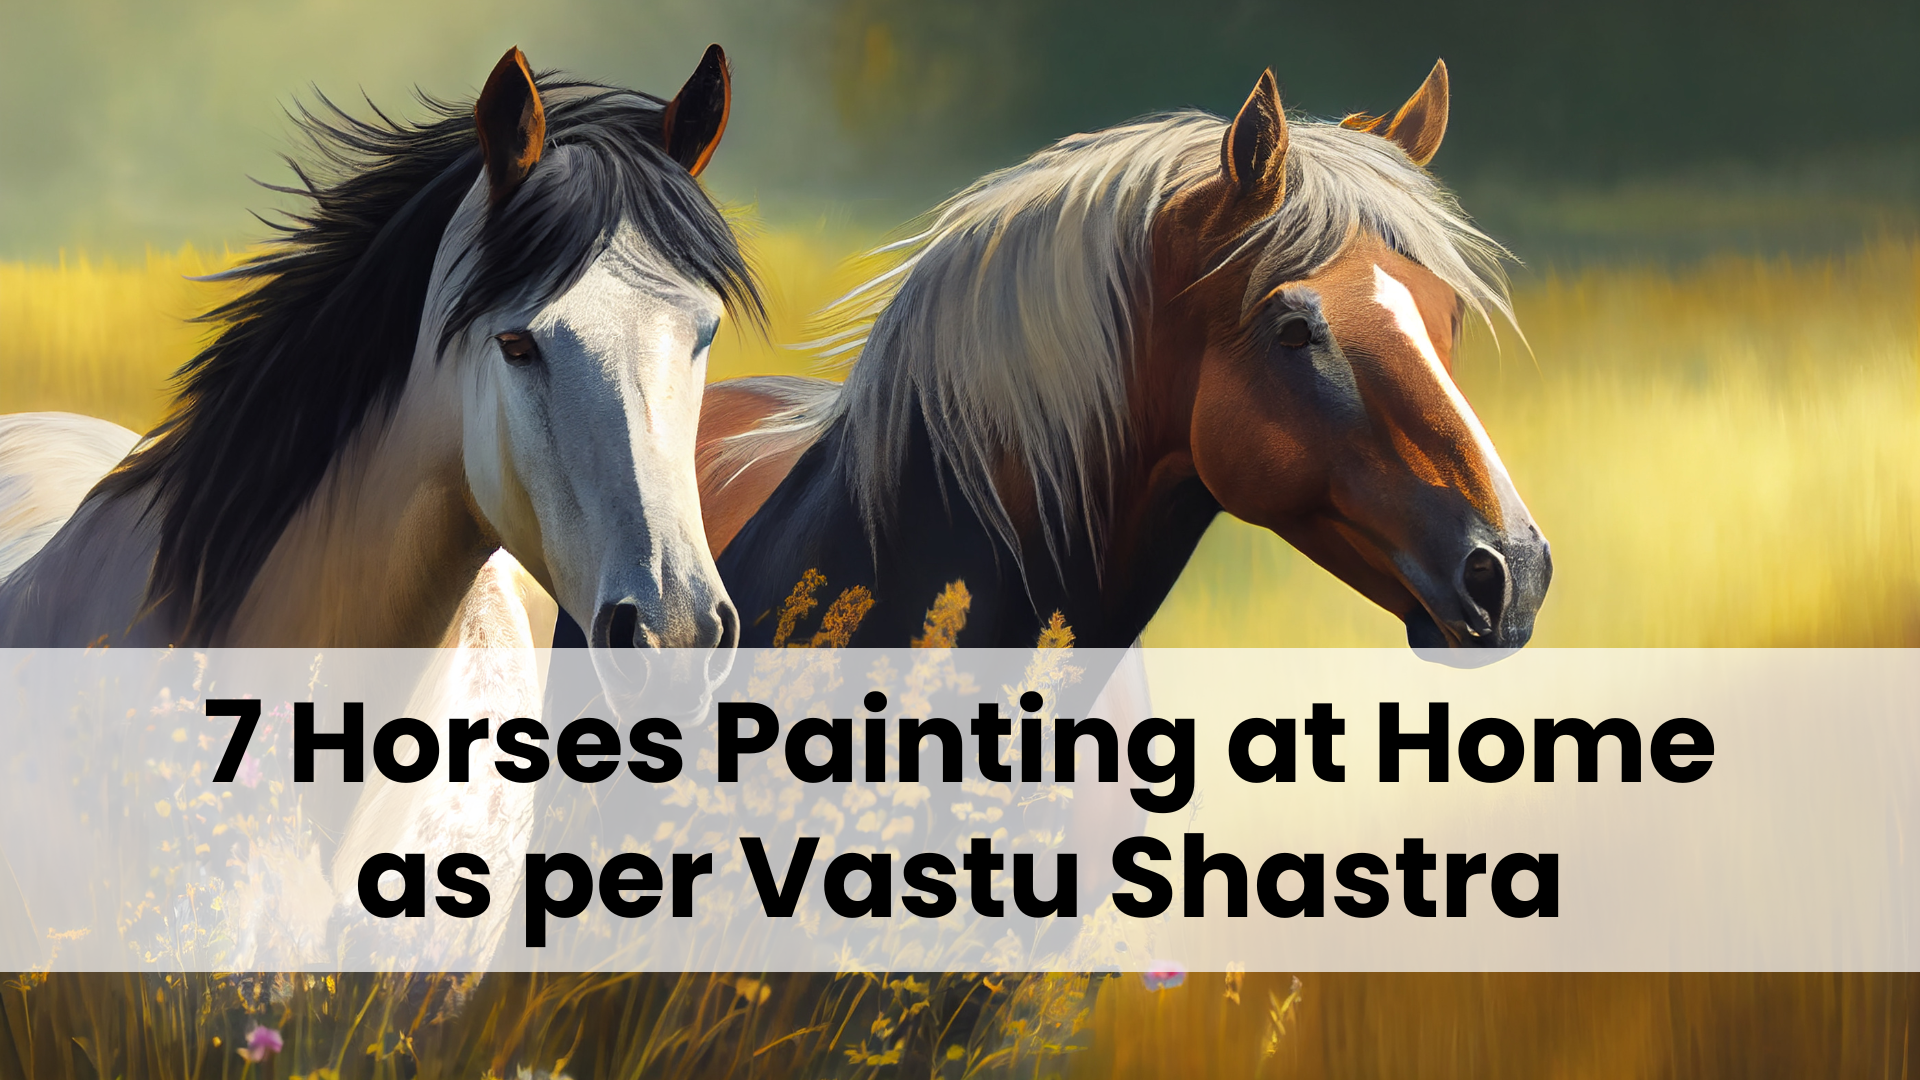 7 Horses Painting at Home as per Vastu Shastra